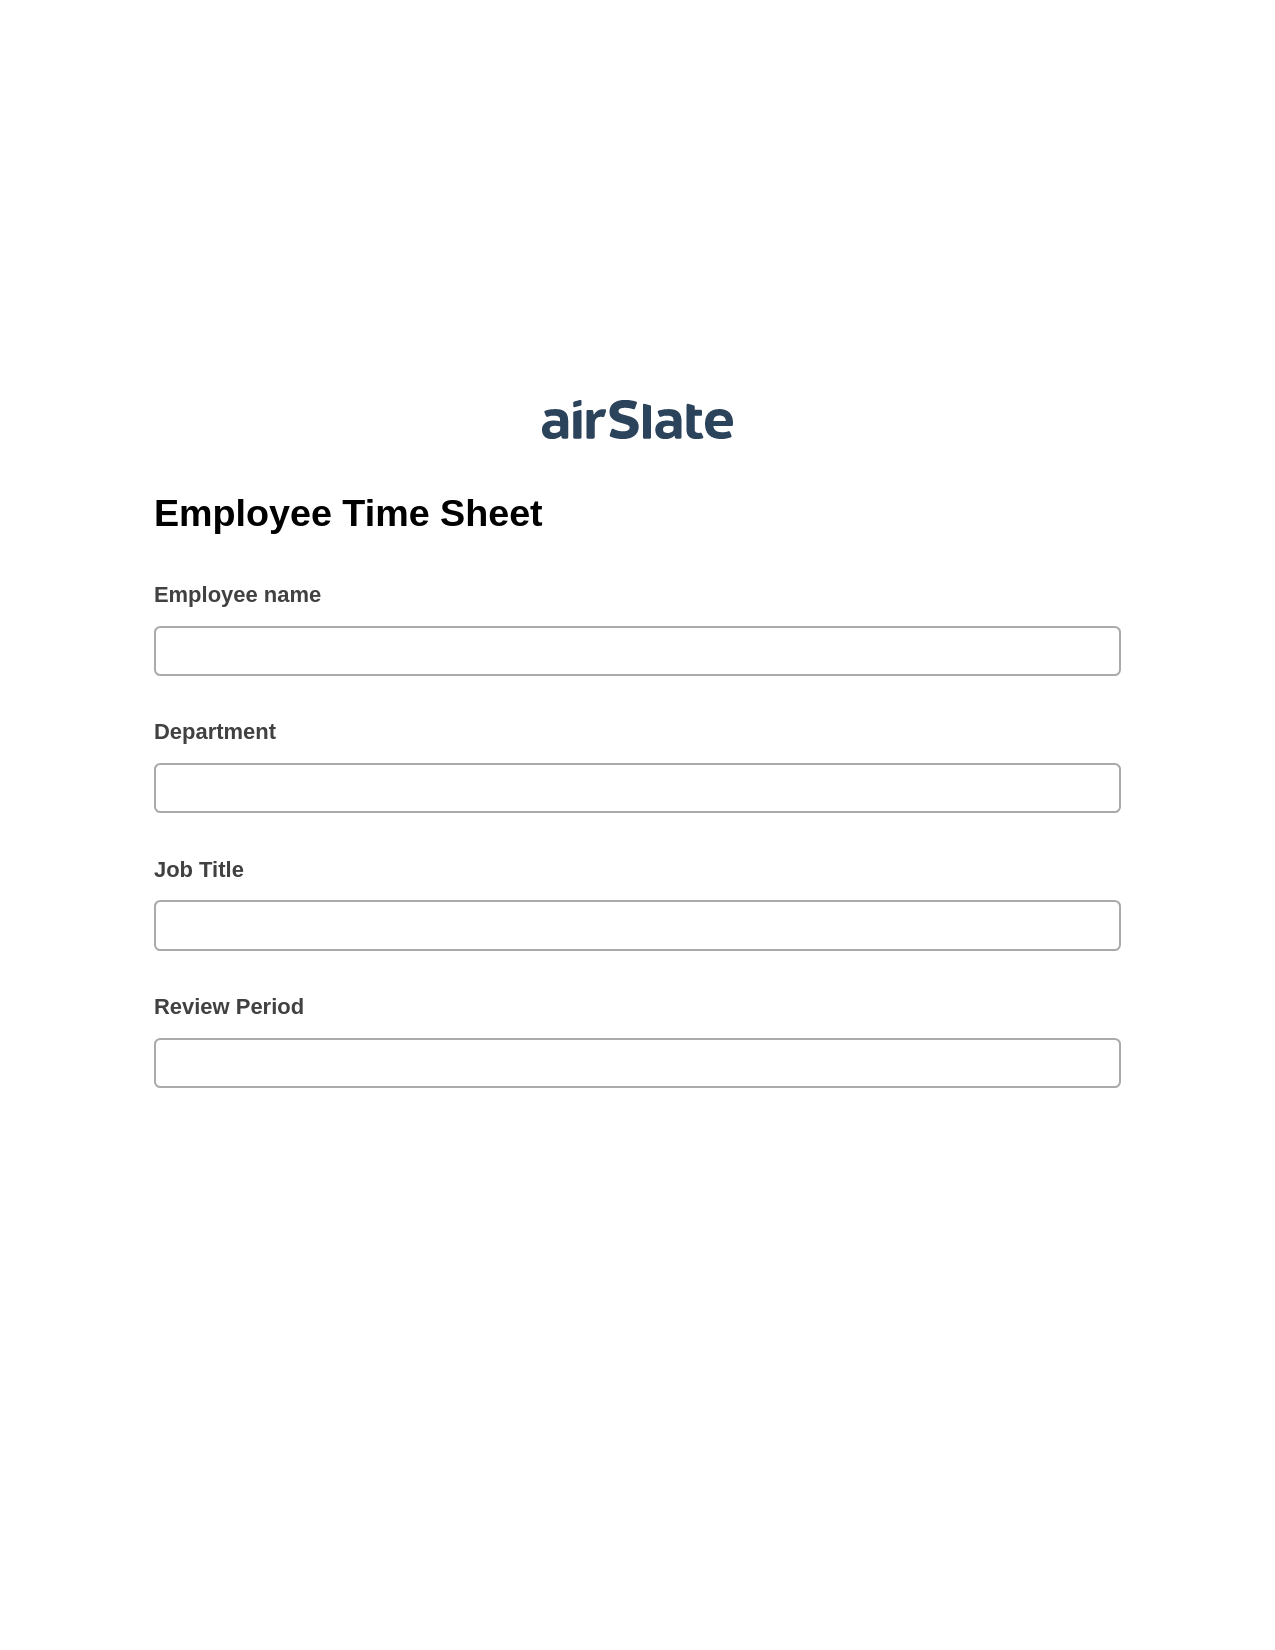 Employee Time Sheet Pre-fill from Salesforce Records Bot, Google Calendar Bot, Post-finish Document Bot